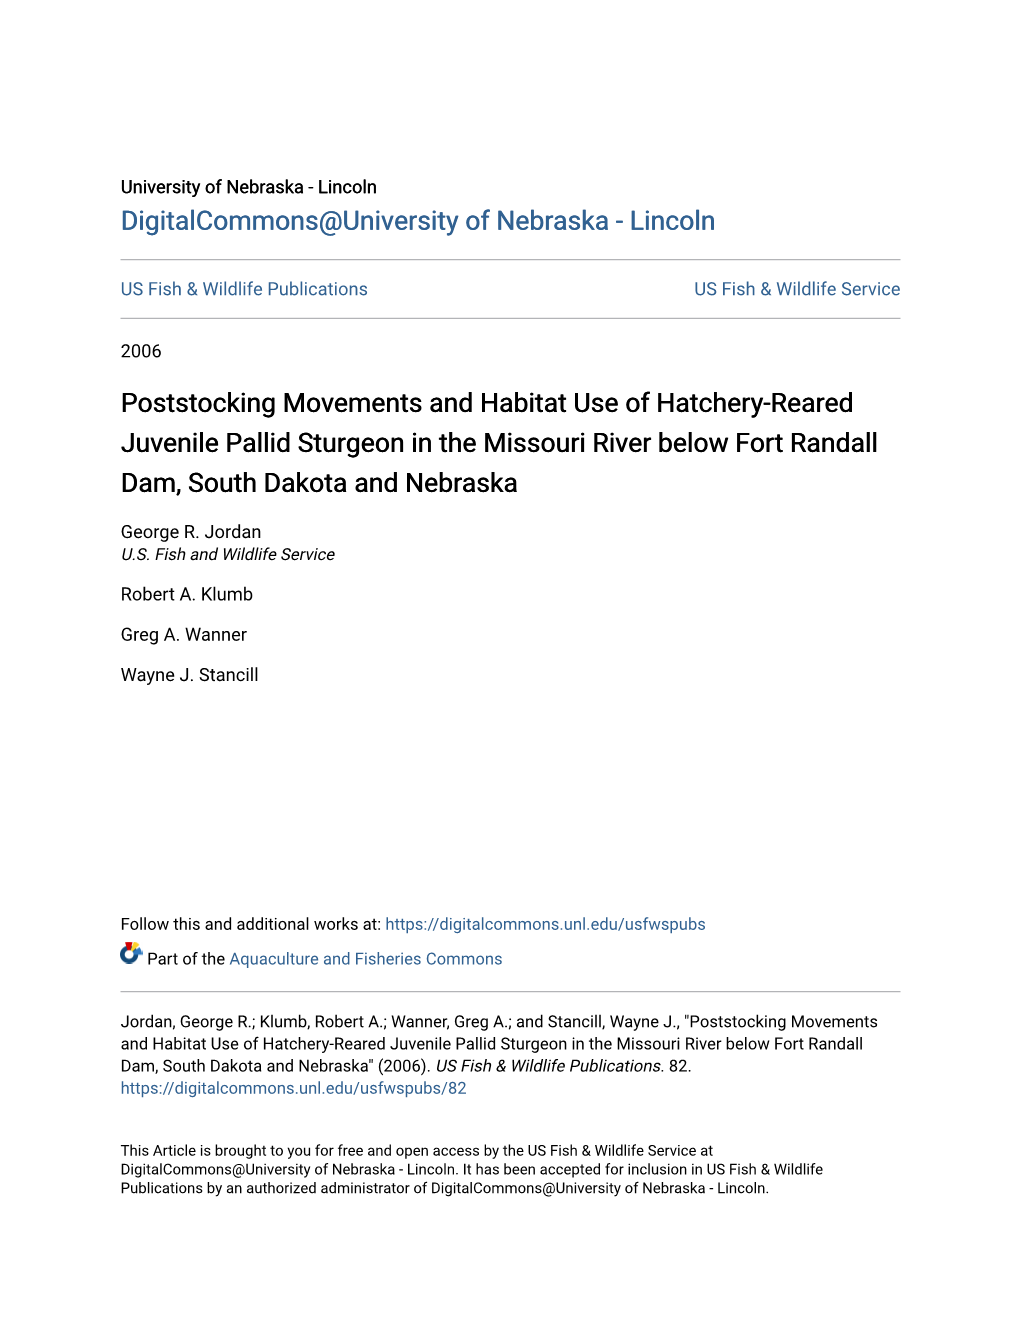 Poststocking Movements and Habitat Use of Hatchery-Reared Juvenile Pallid Sturgeon in the Missouri River Below Fort Randall Dam, South Dakota and Nebraska